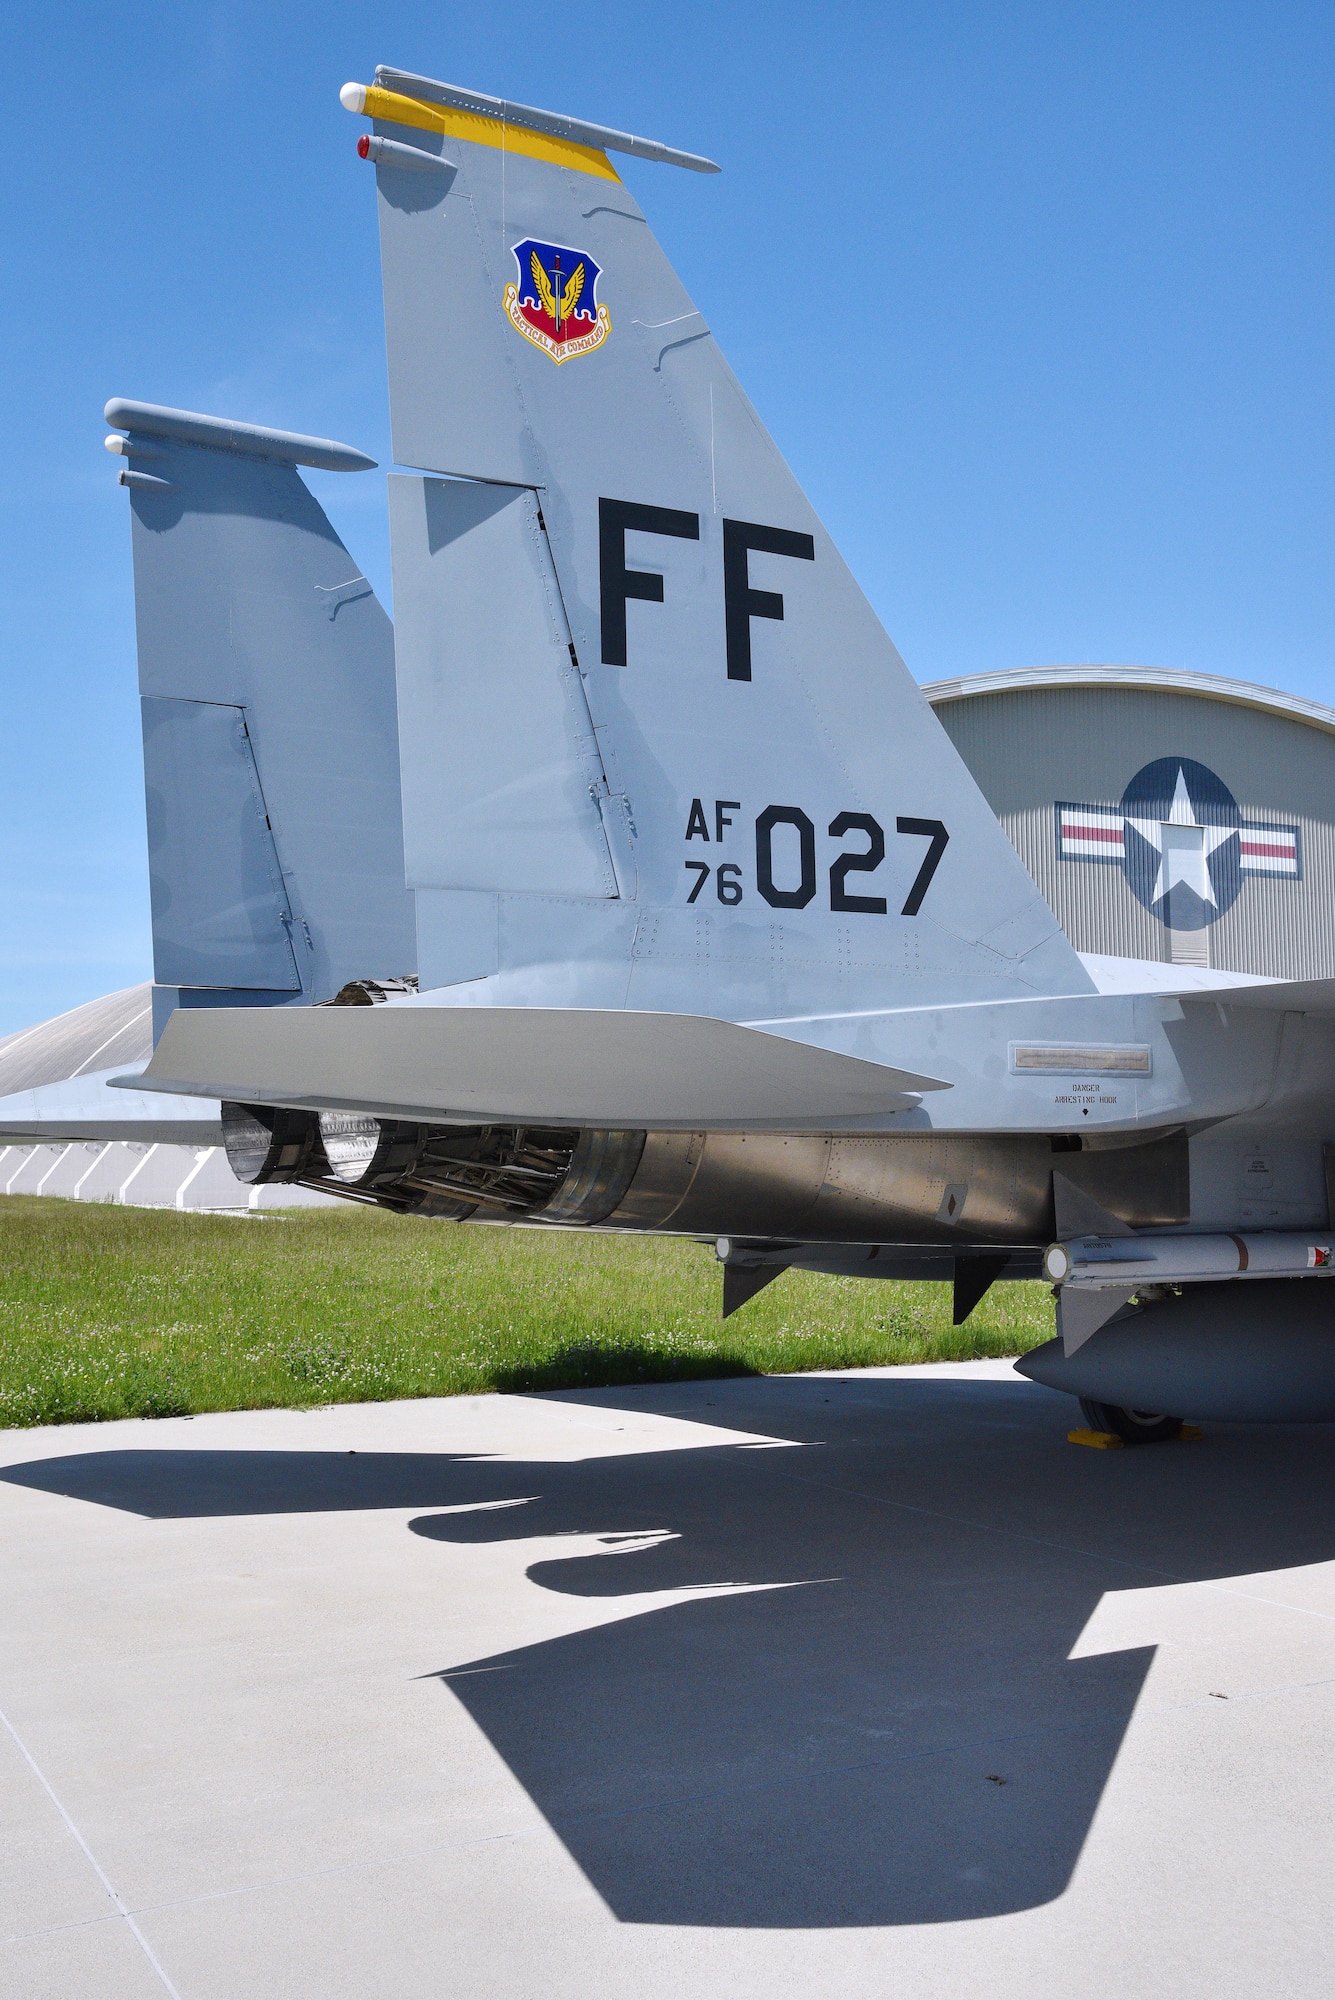 McDonnell Douglas F-15A Eagle aircraft